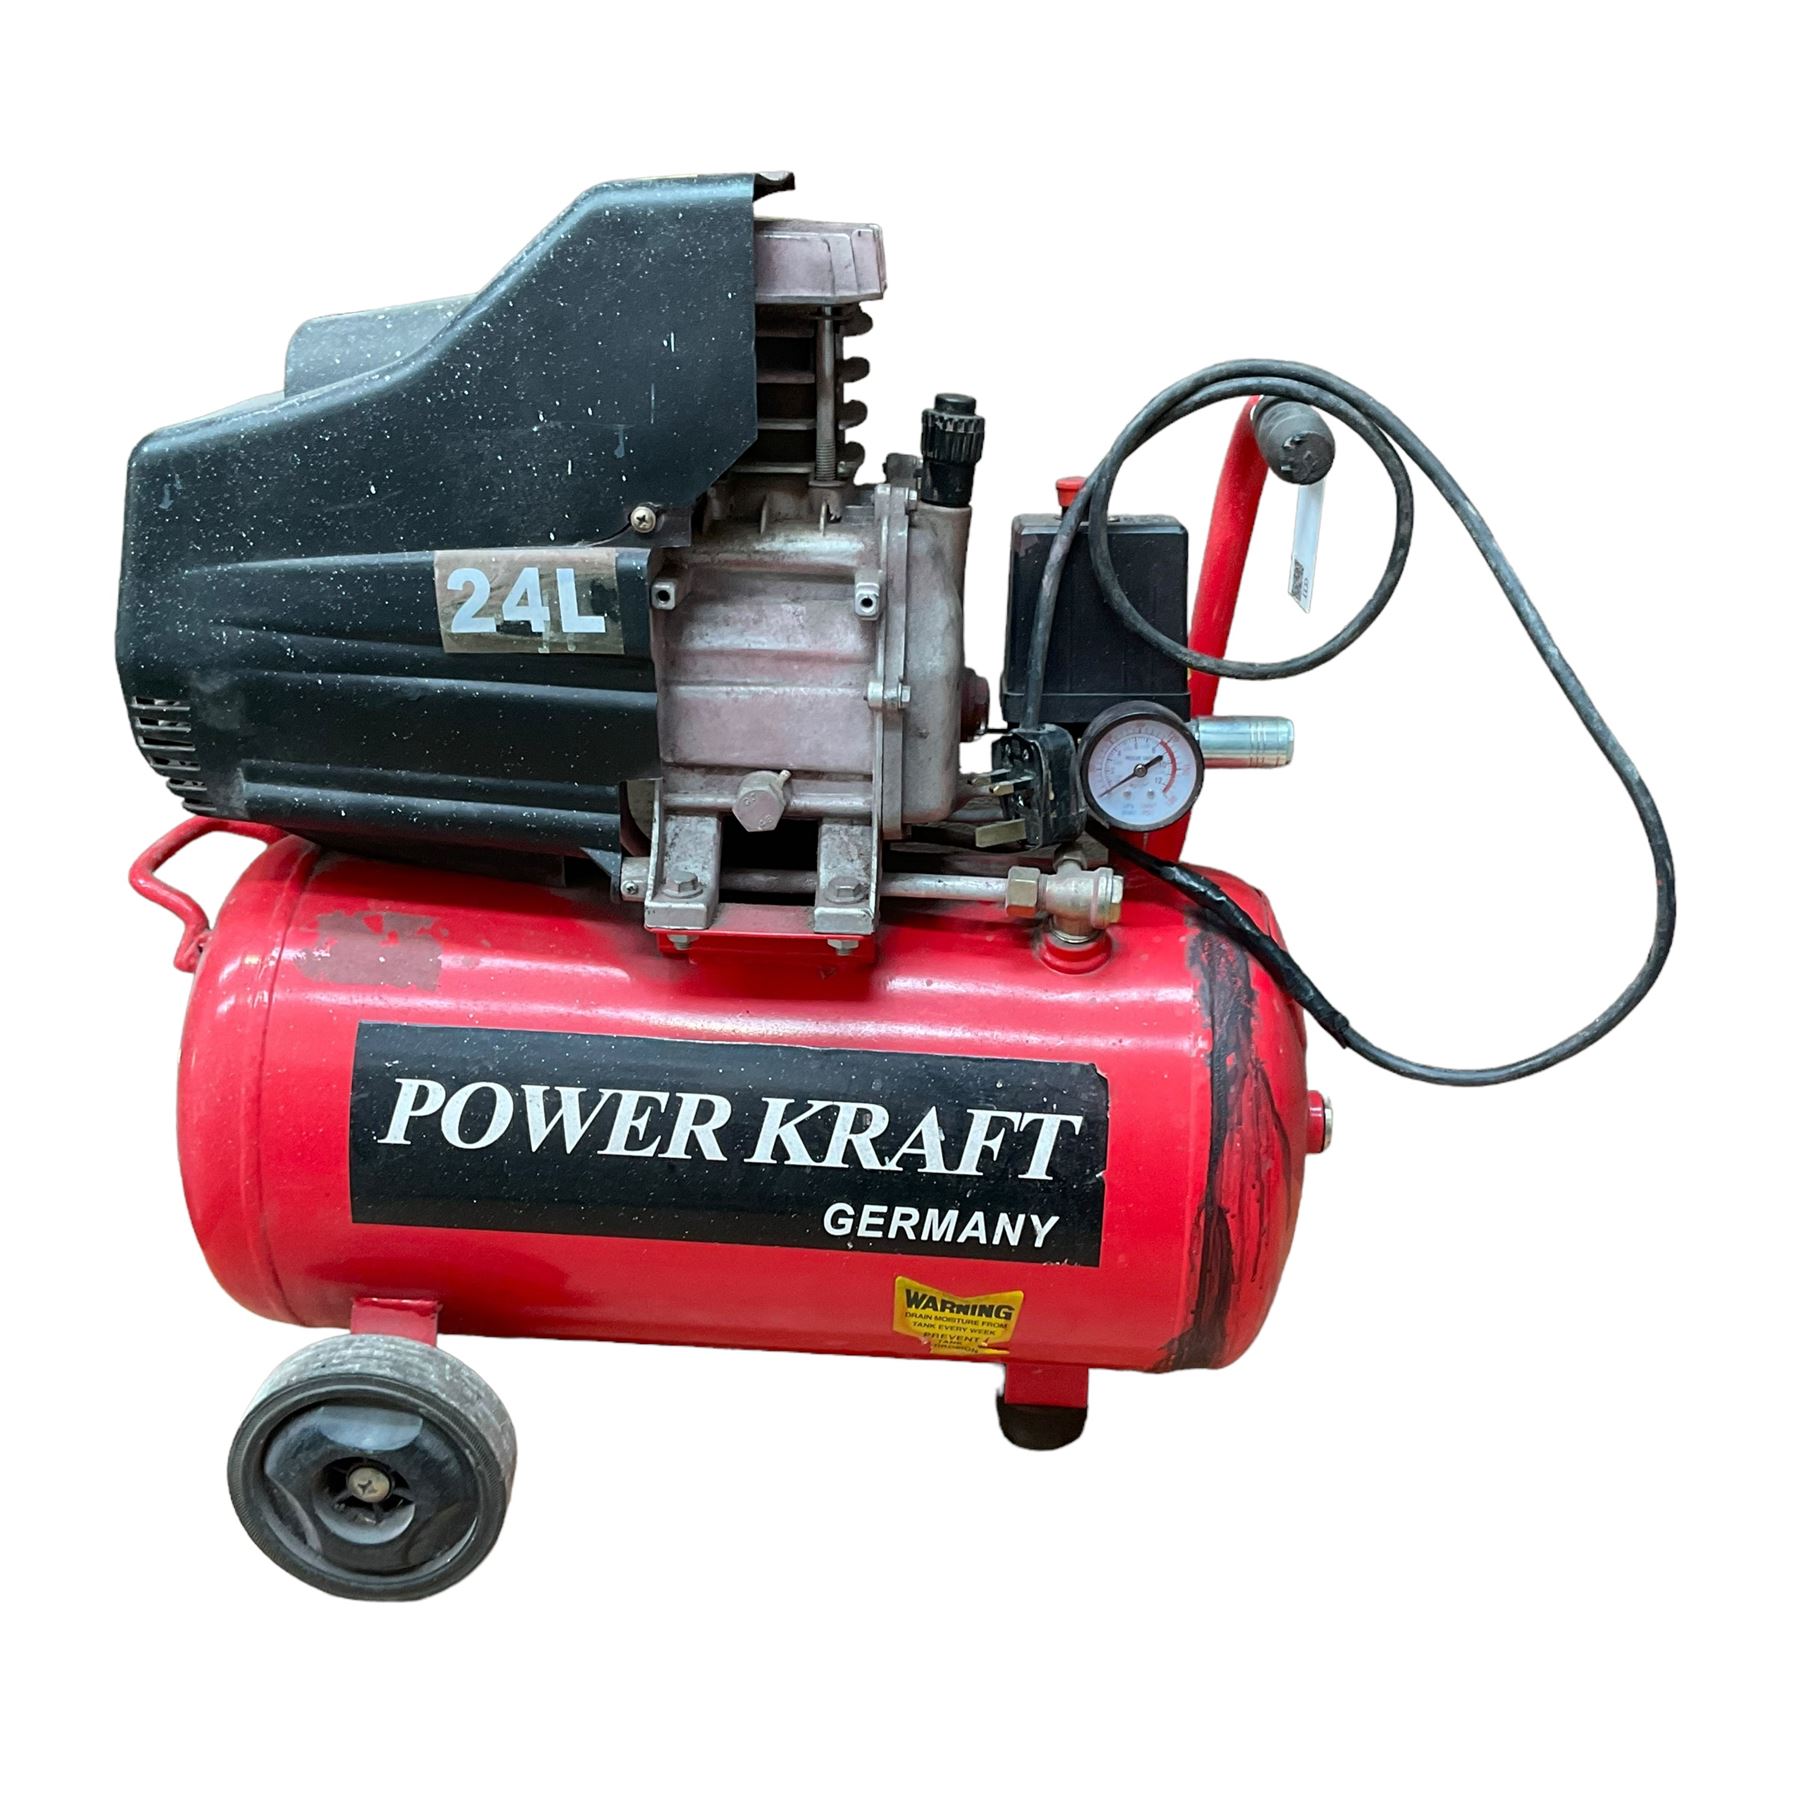 Power Kraft 24L air compressor